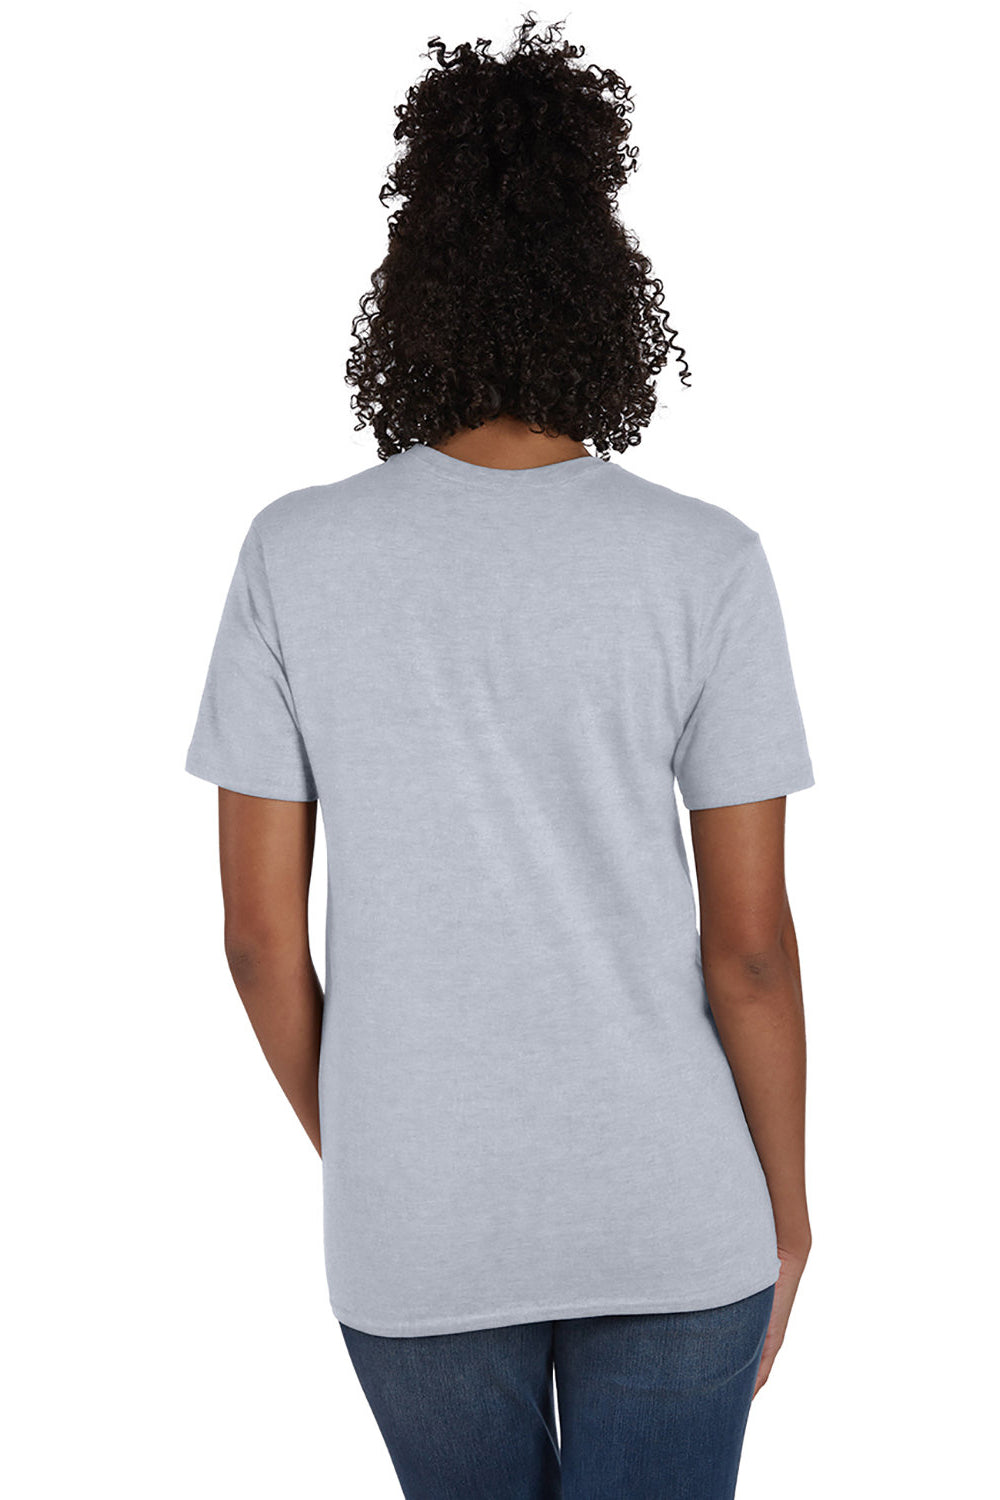 Hanes 4980 Mens Nano-T Short Sleeve Crewneck T-Shirt Heather Silverstone Grey Back